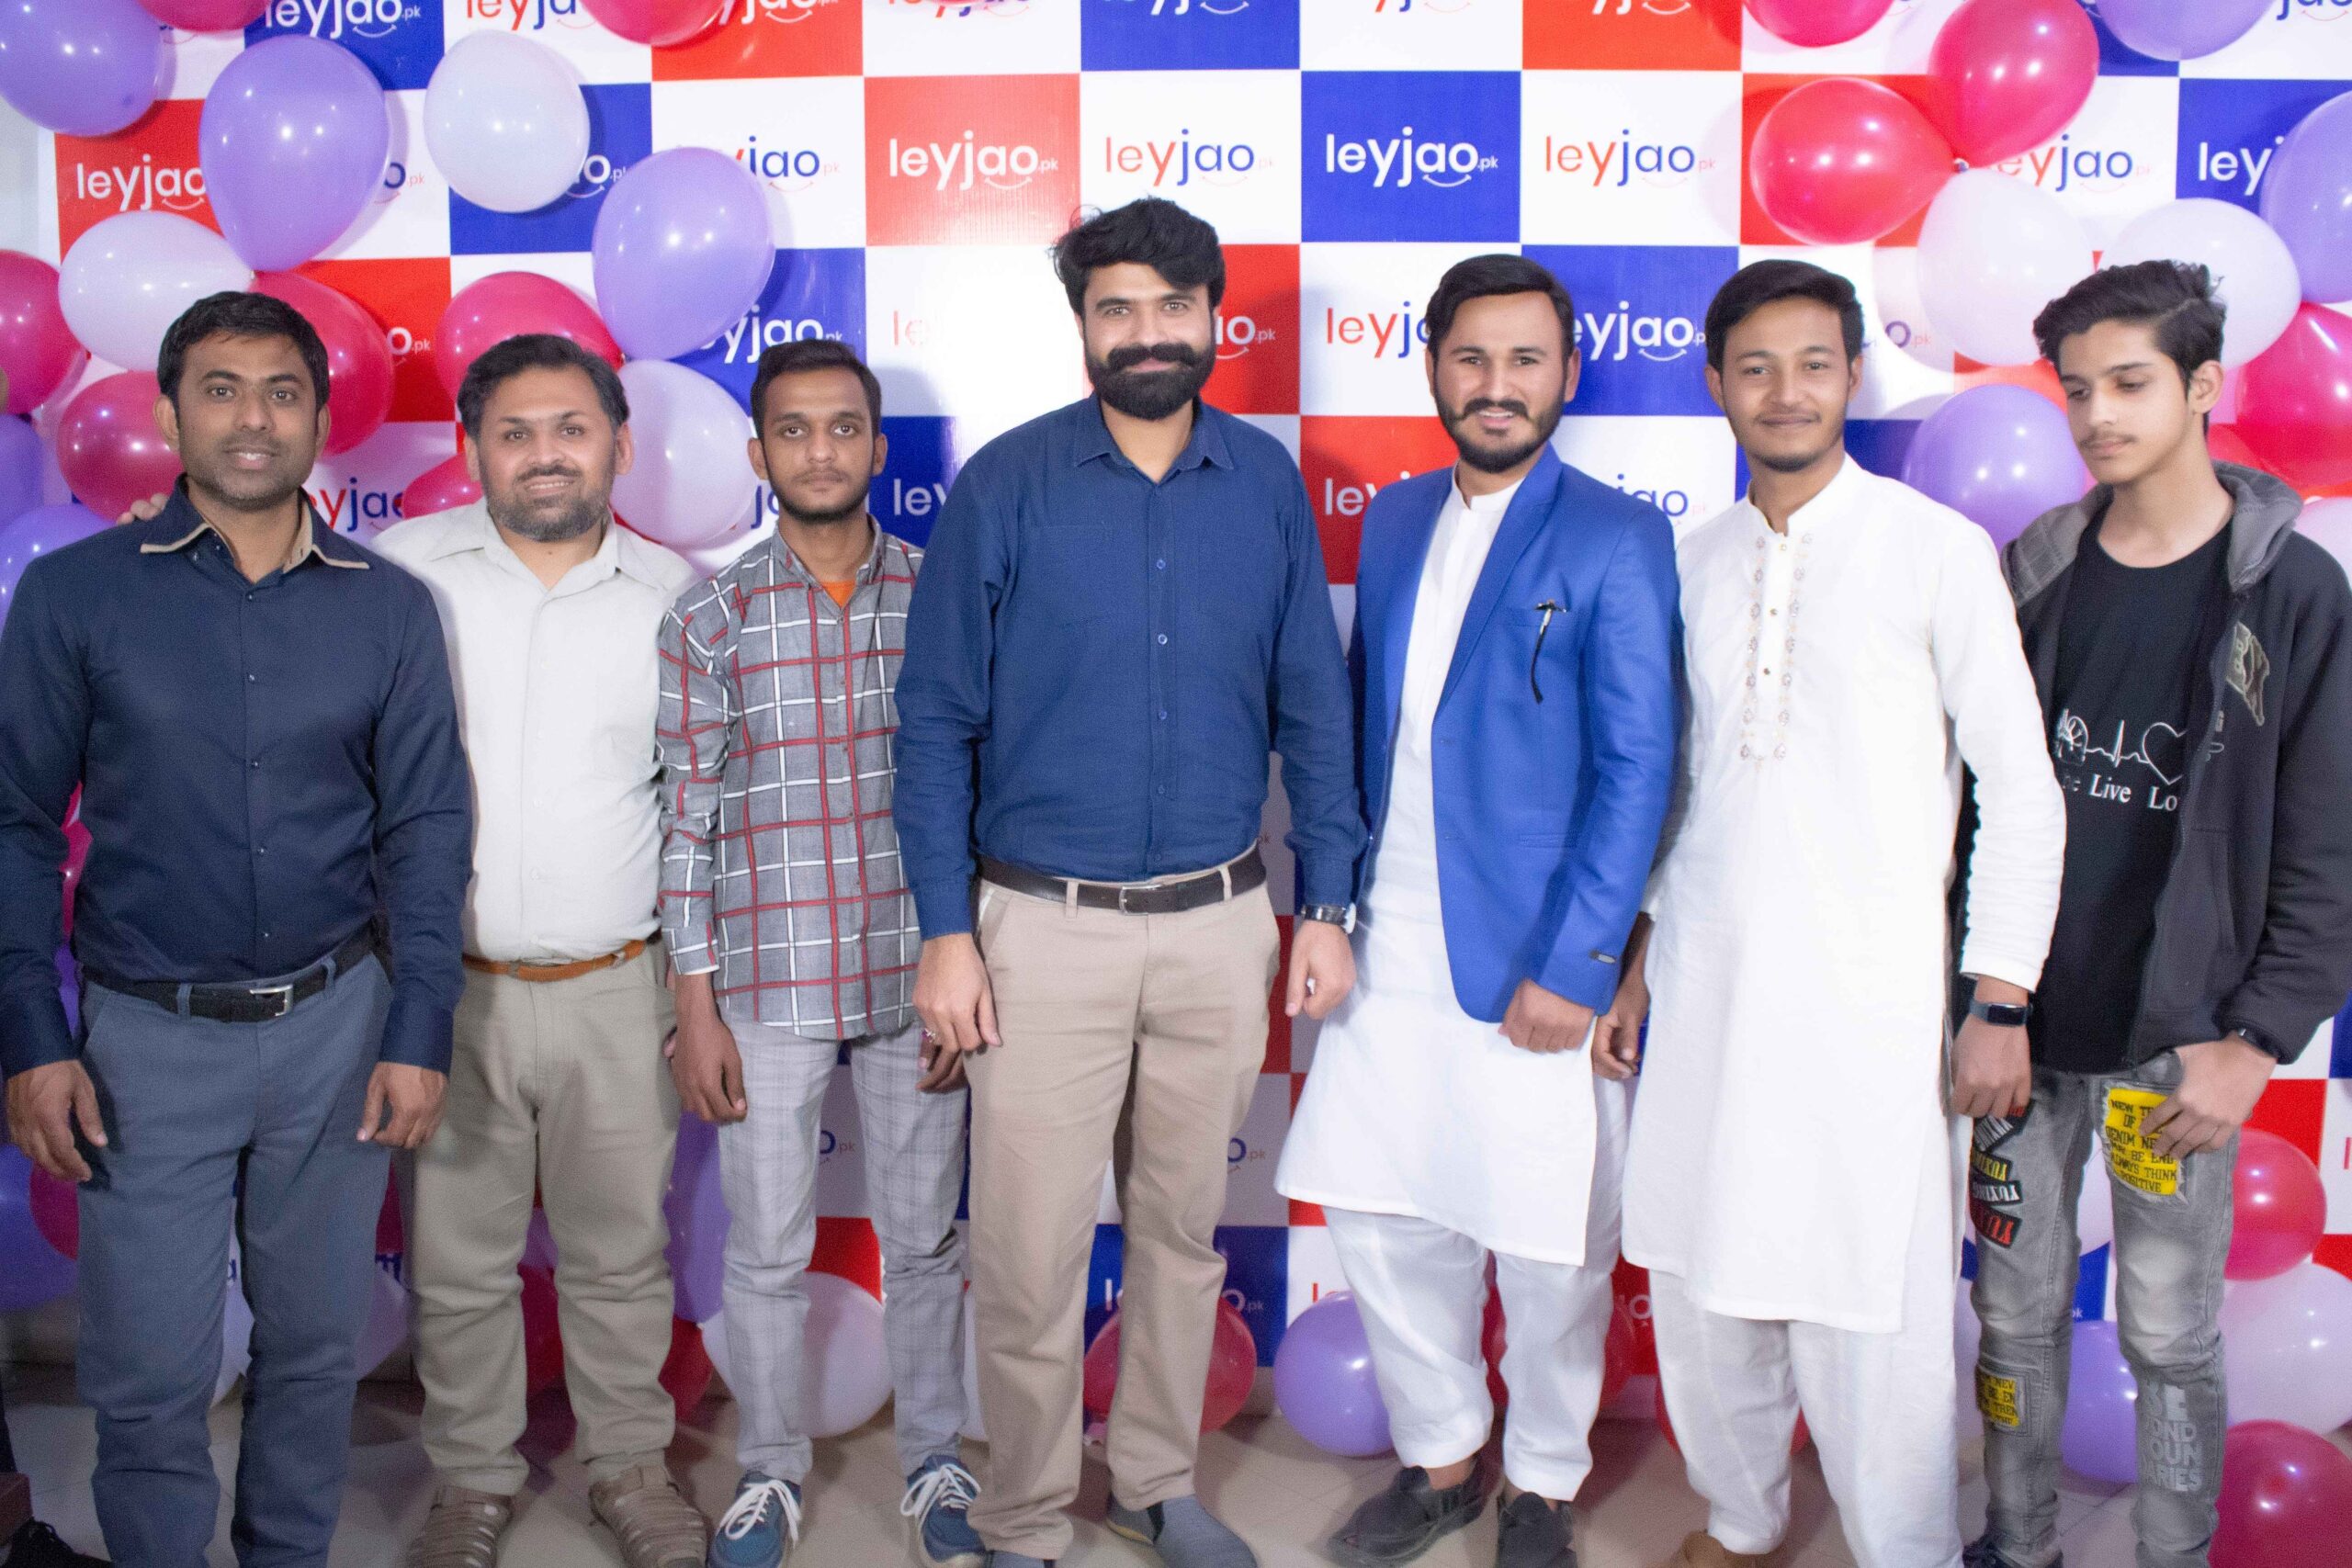 Leyjao.pk Celebrating 4th Anniversary Online Shopping in Pakistan